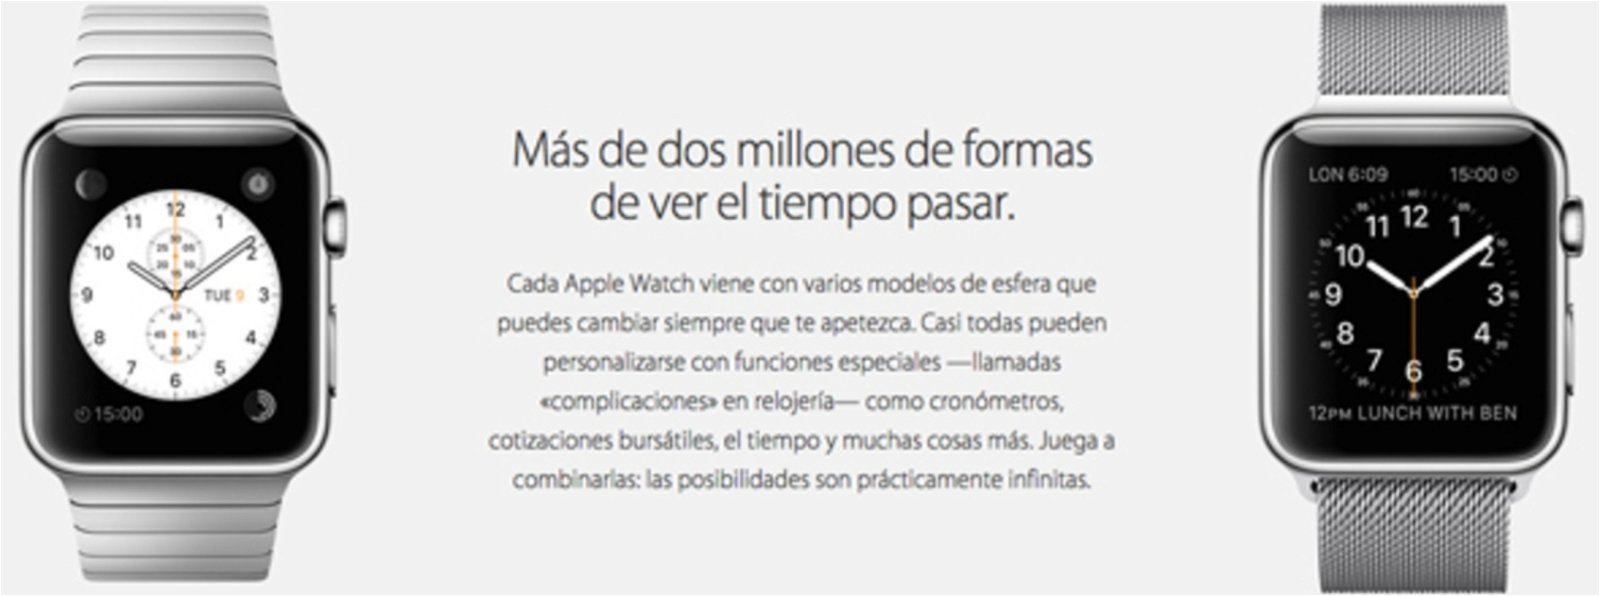 apple-watch-web-actualizada-3